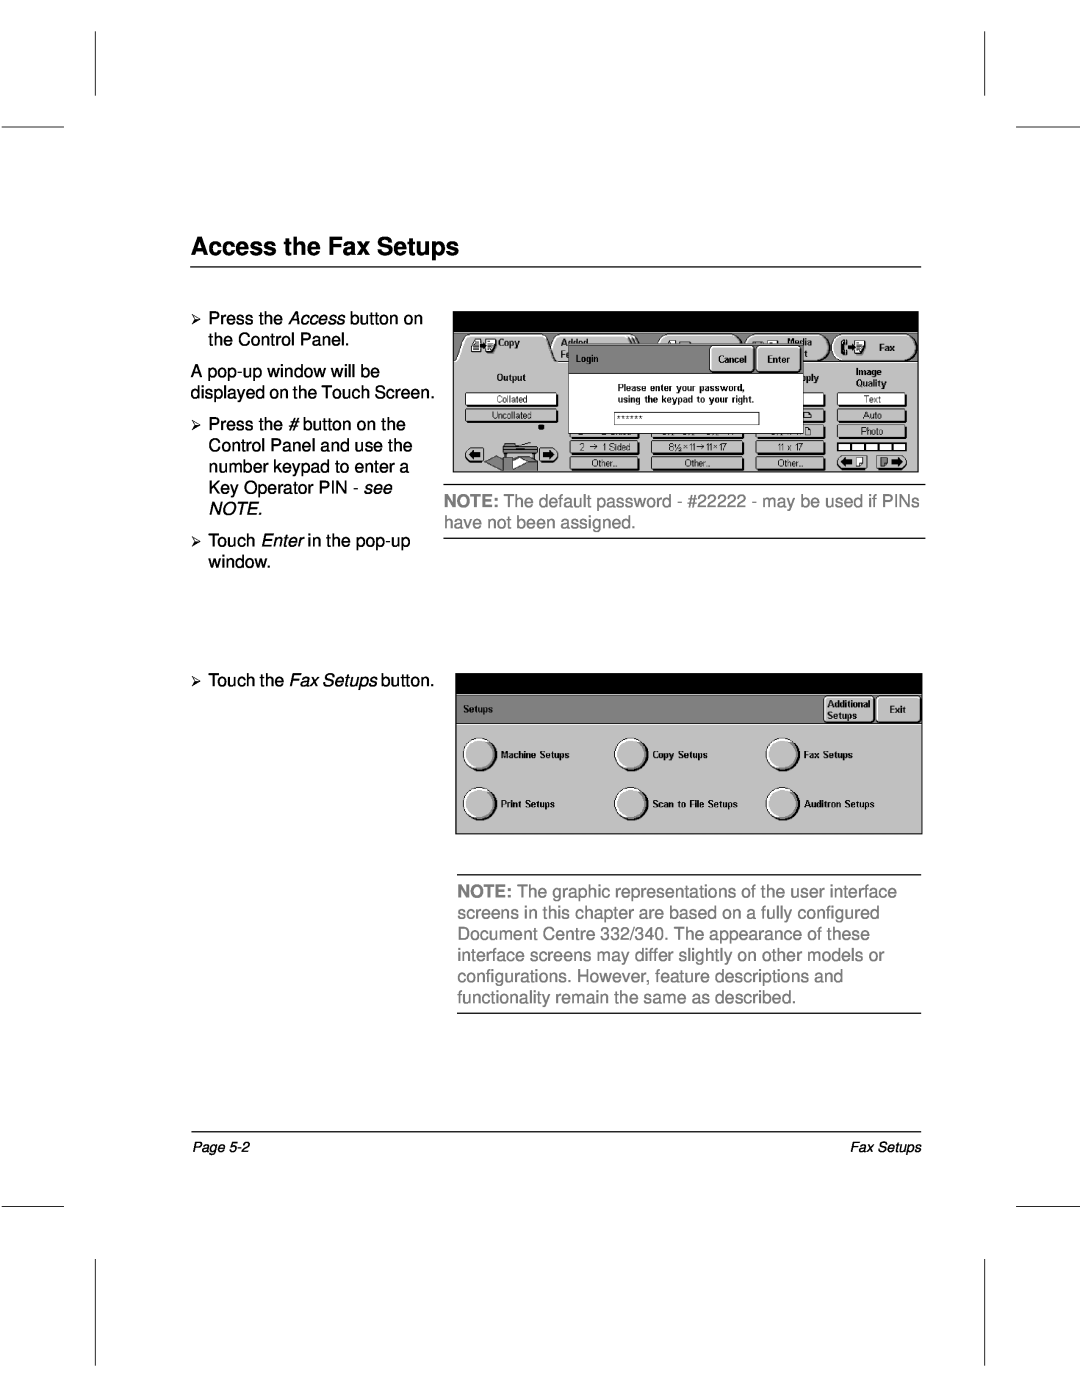 Xerox 340, 332, 220, 230 setup guide Access the Fax Setups, ¿ Note 